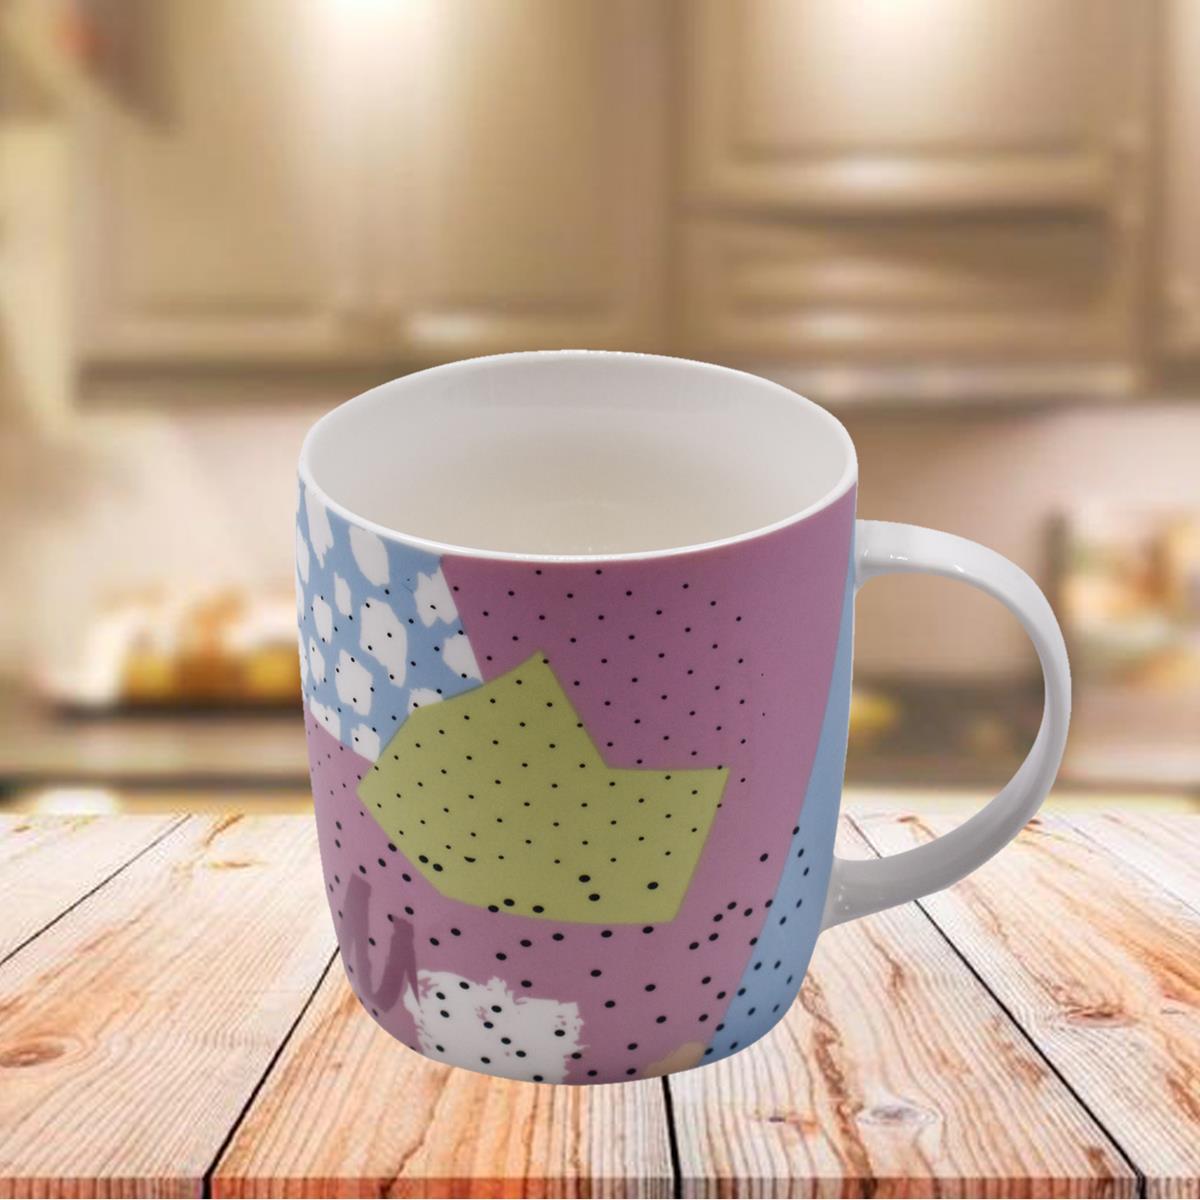 Kookee Ceramic Coffee or Tea Mug with handle for Office, Home or Gifting - 325ml (R4901-F)